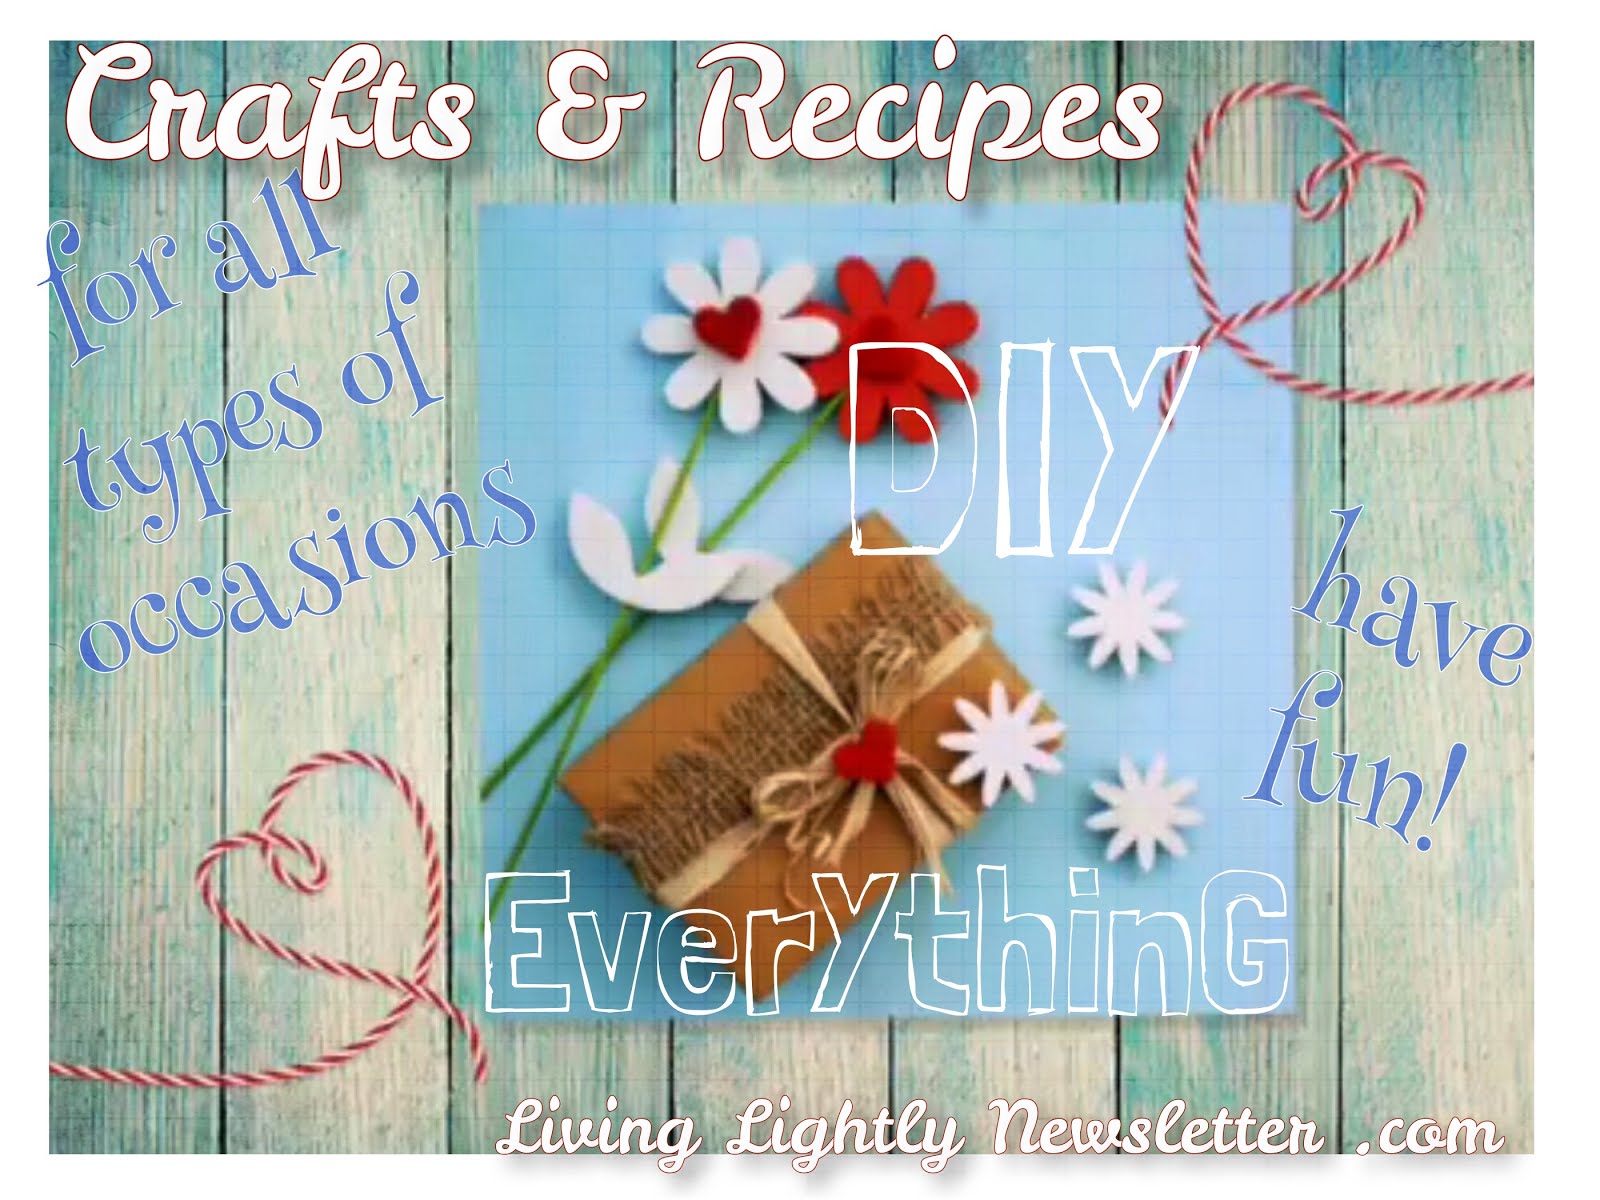 Manifesting, Crafts & Recipes!